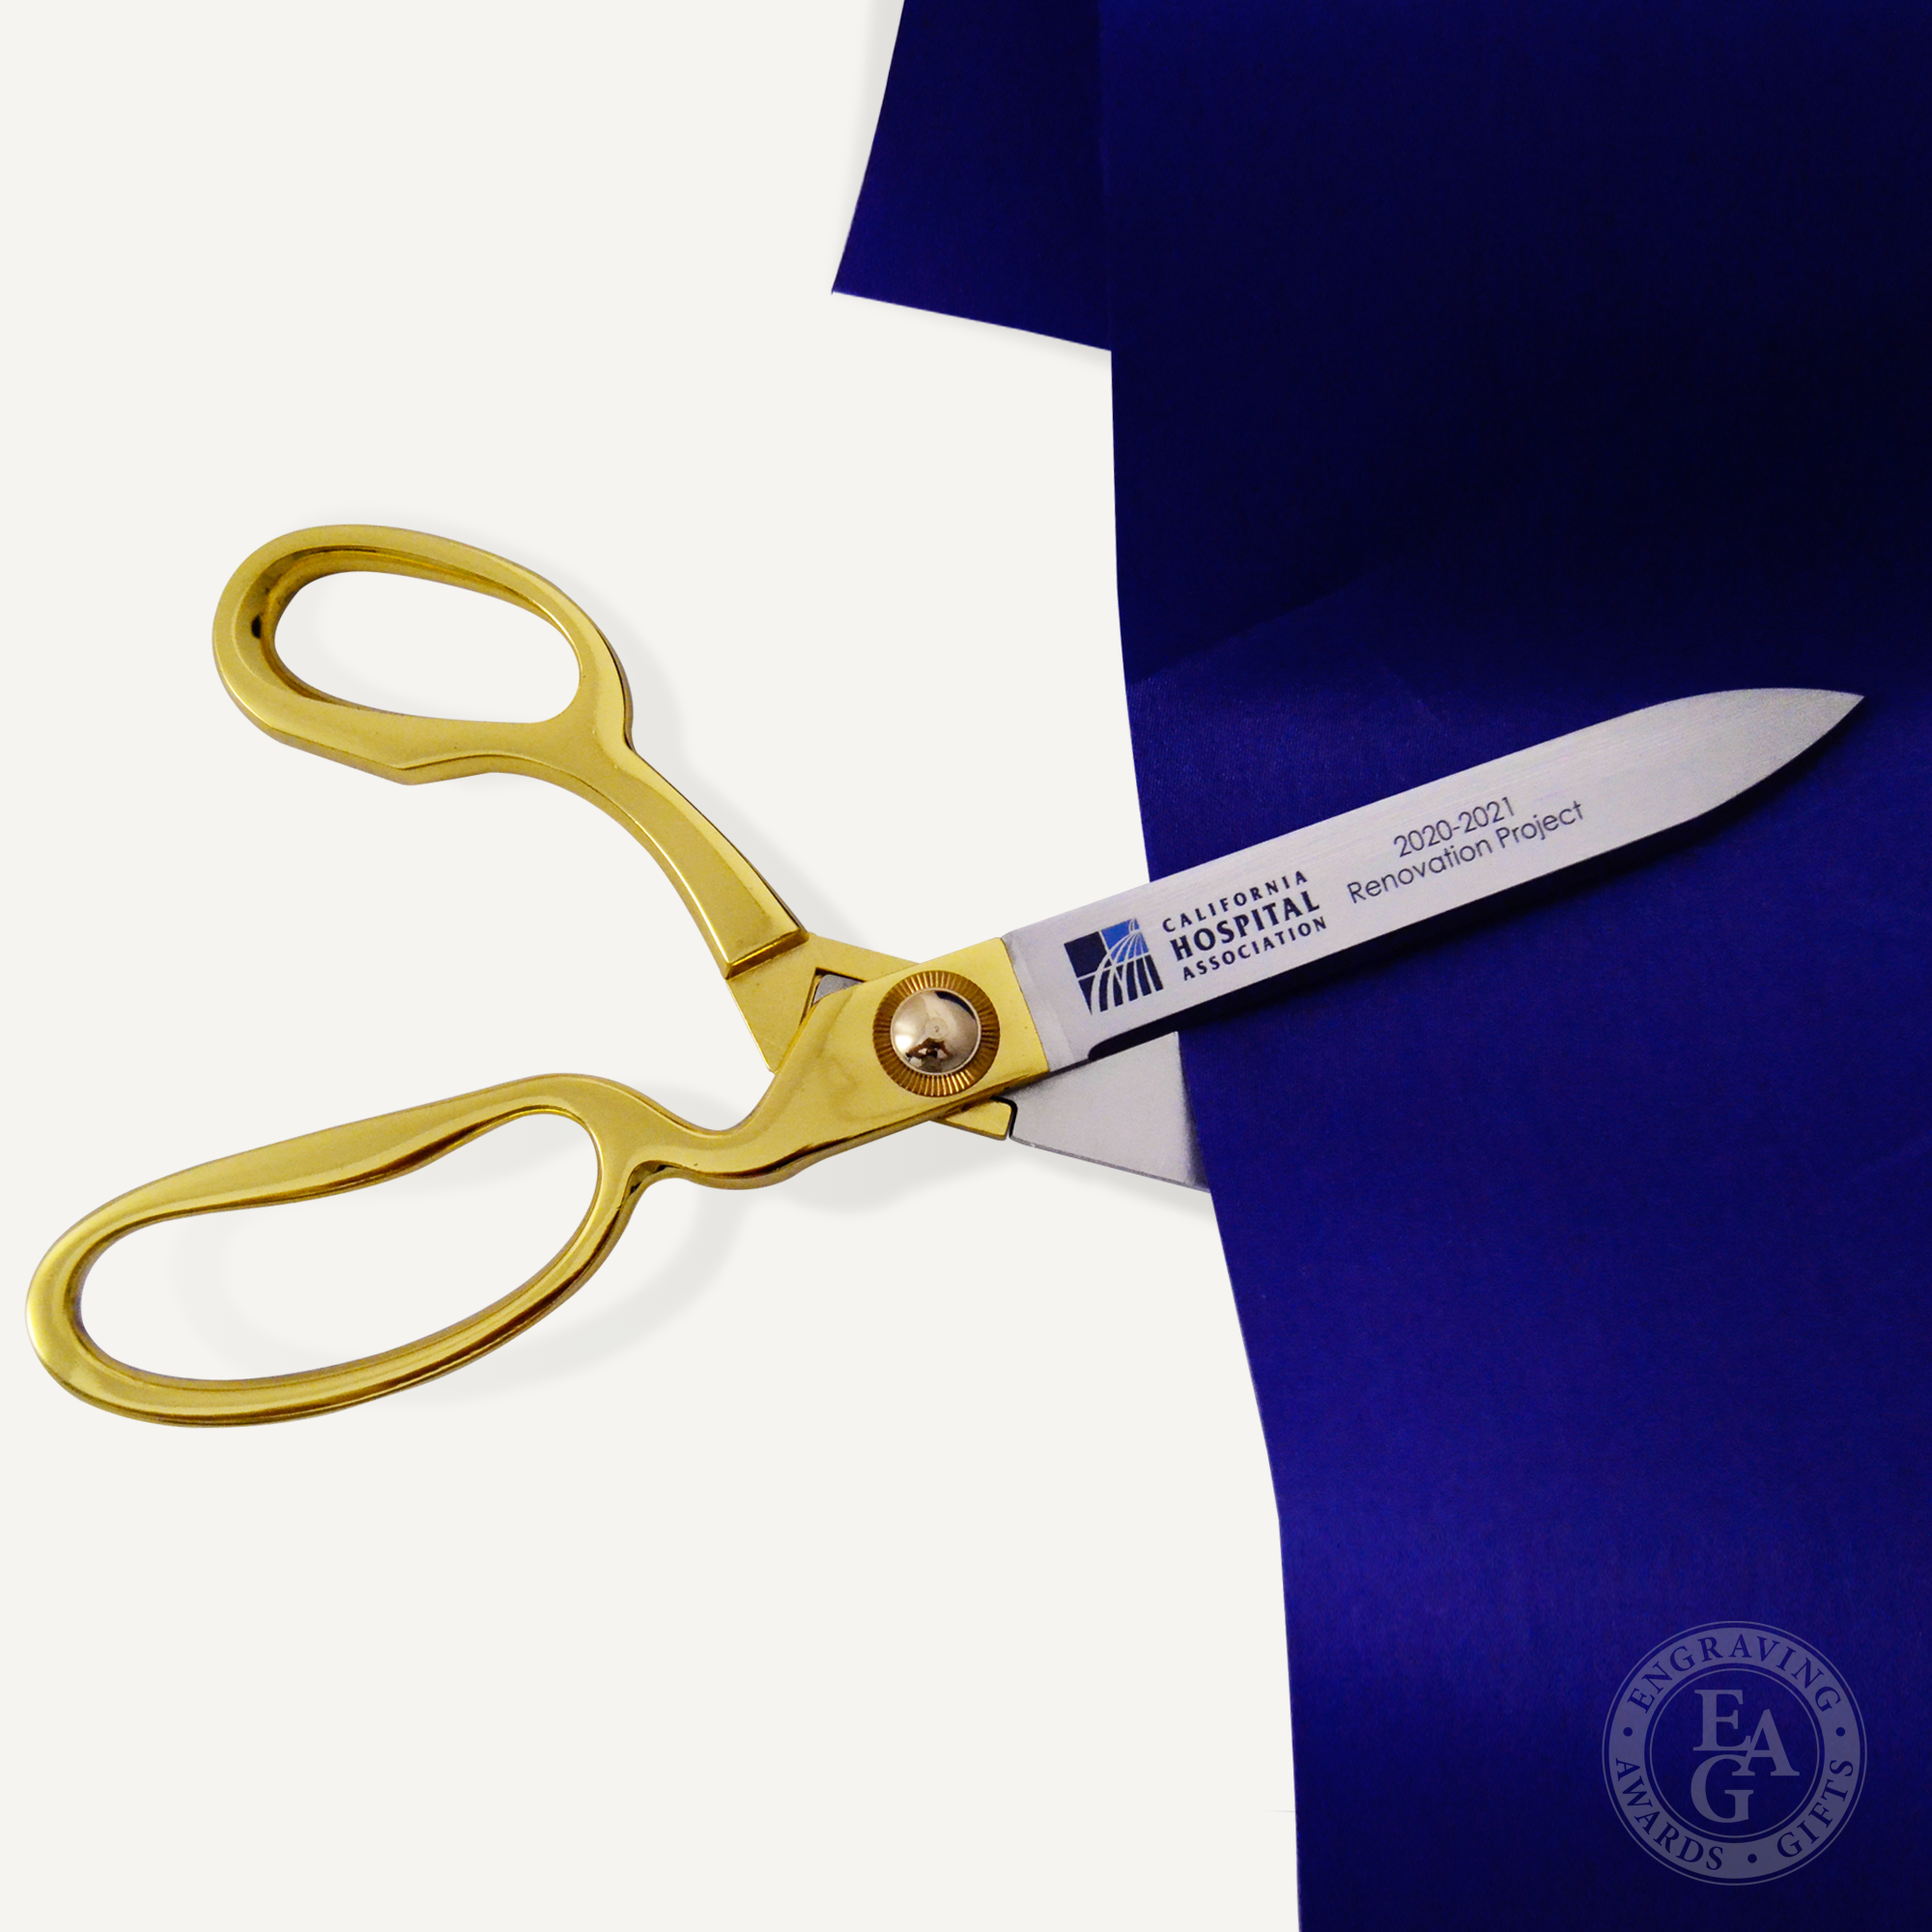 Personalized SCISSORS Custom Engraved Scissor Office Fabric 